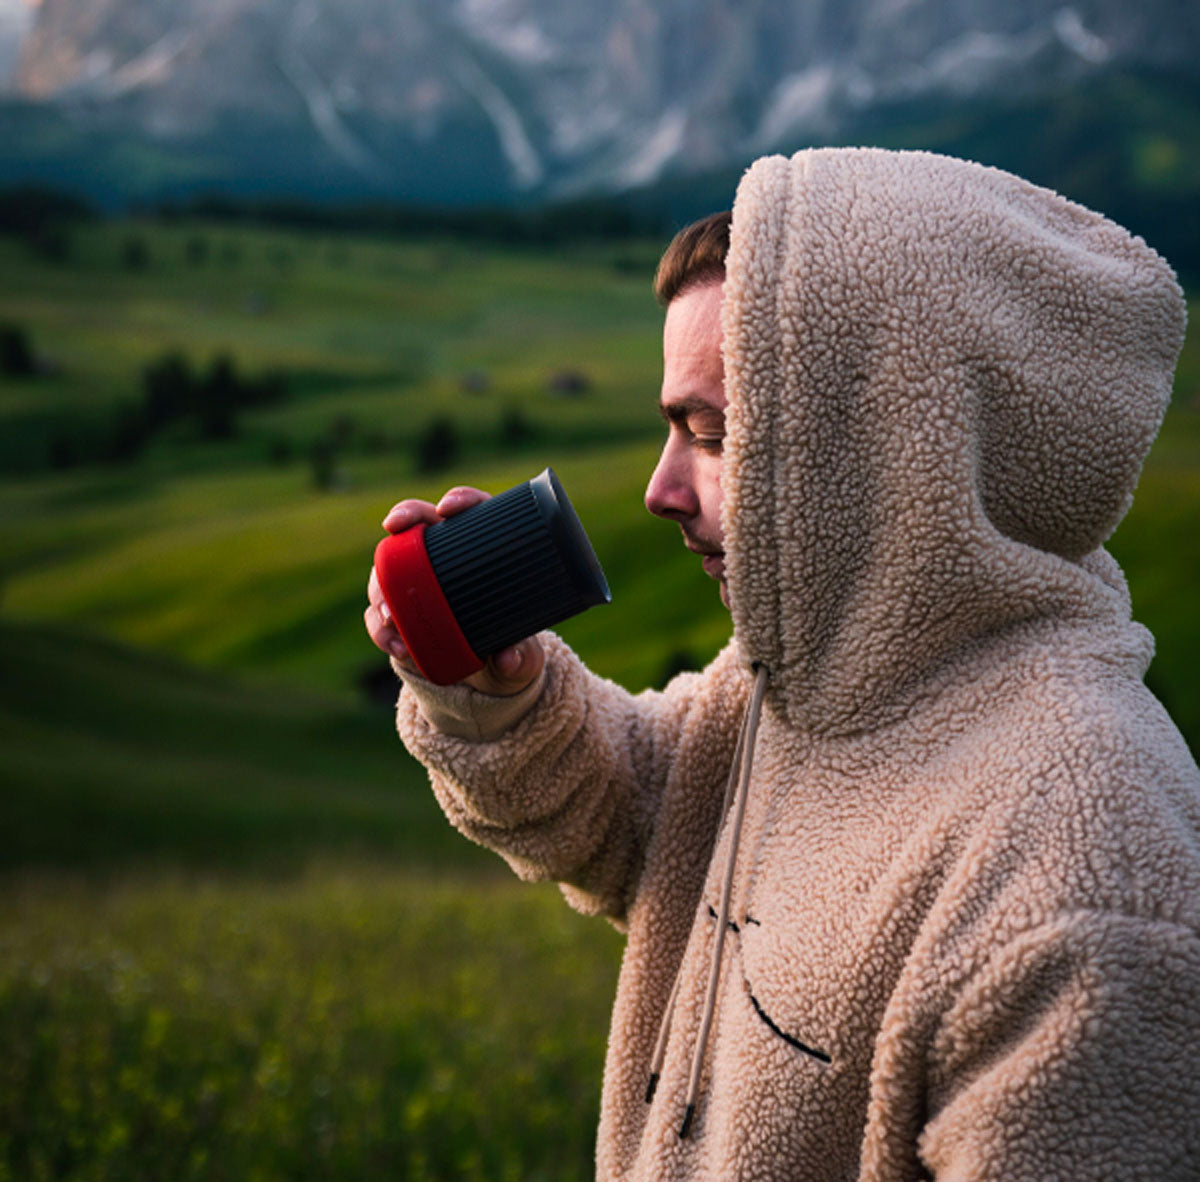 Man in sweater drinking coffee from AeroPress Go mug outdoors